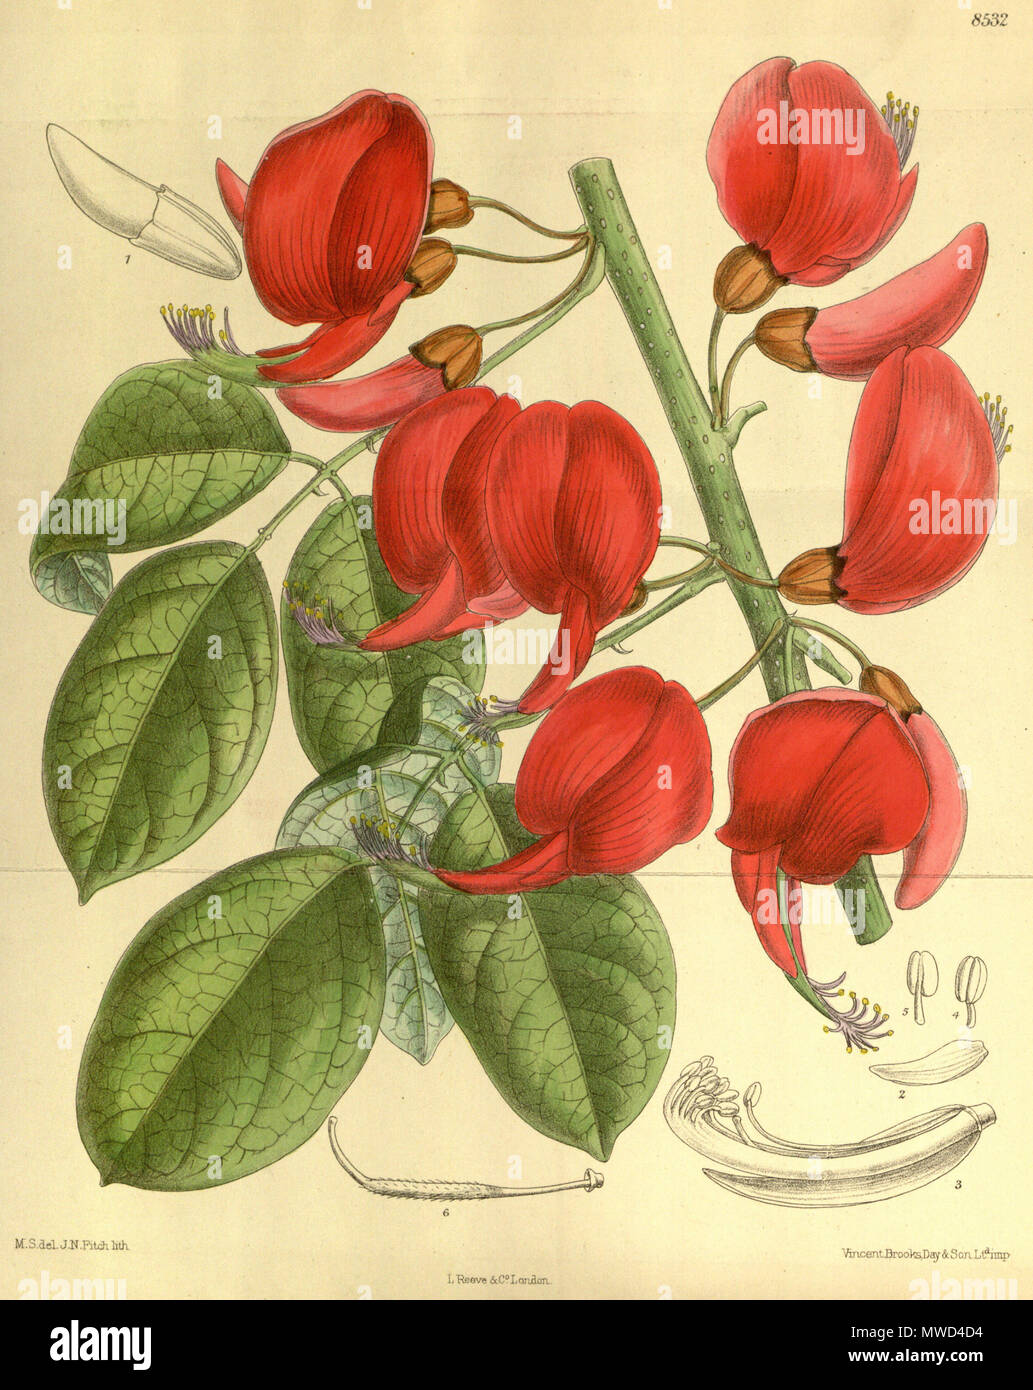 . Erythrina pulcherrima (= Erythrina crista-galli), Fabaceae . 1914. M.S. del., J.N.Fitch lith. 194 Erythrina pulcherrima 140-8532 Stock Photo